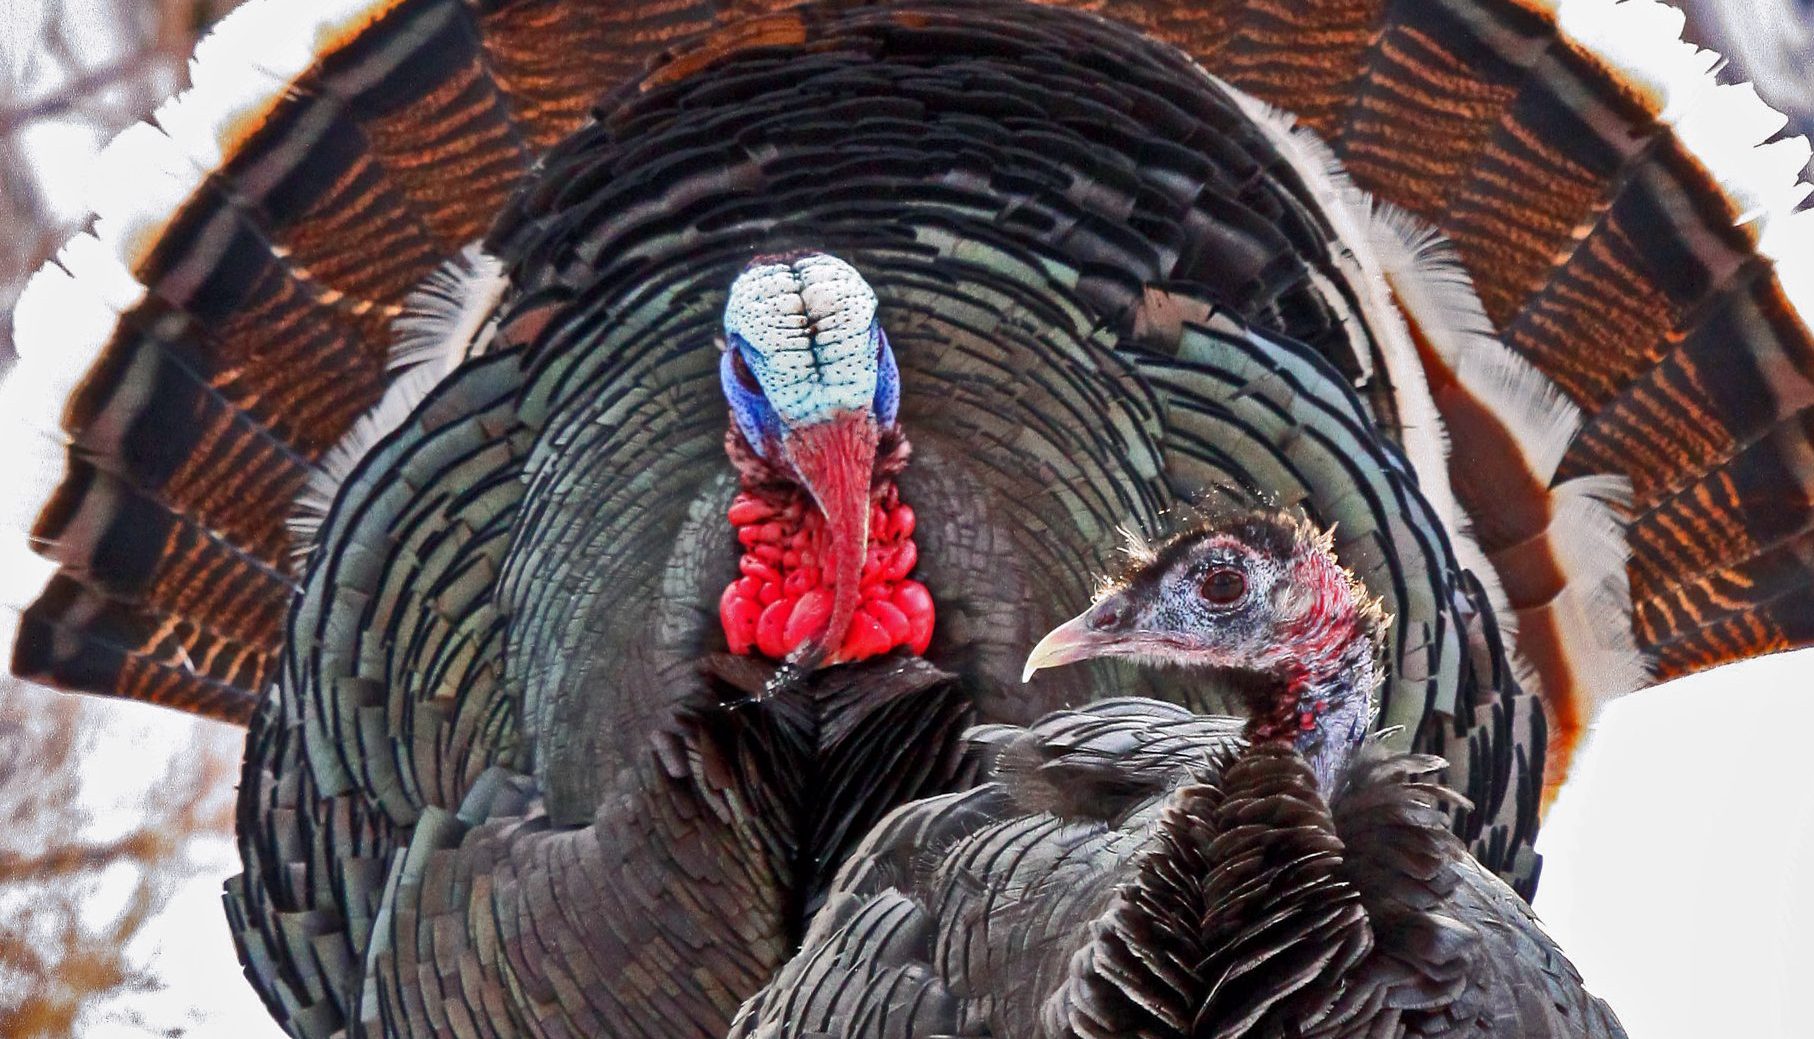 Wild turkey restoration a conservation success story